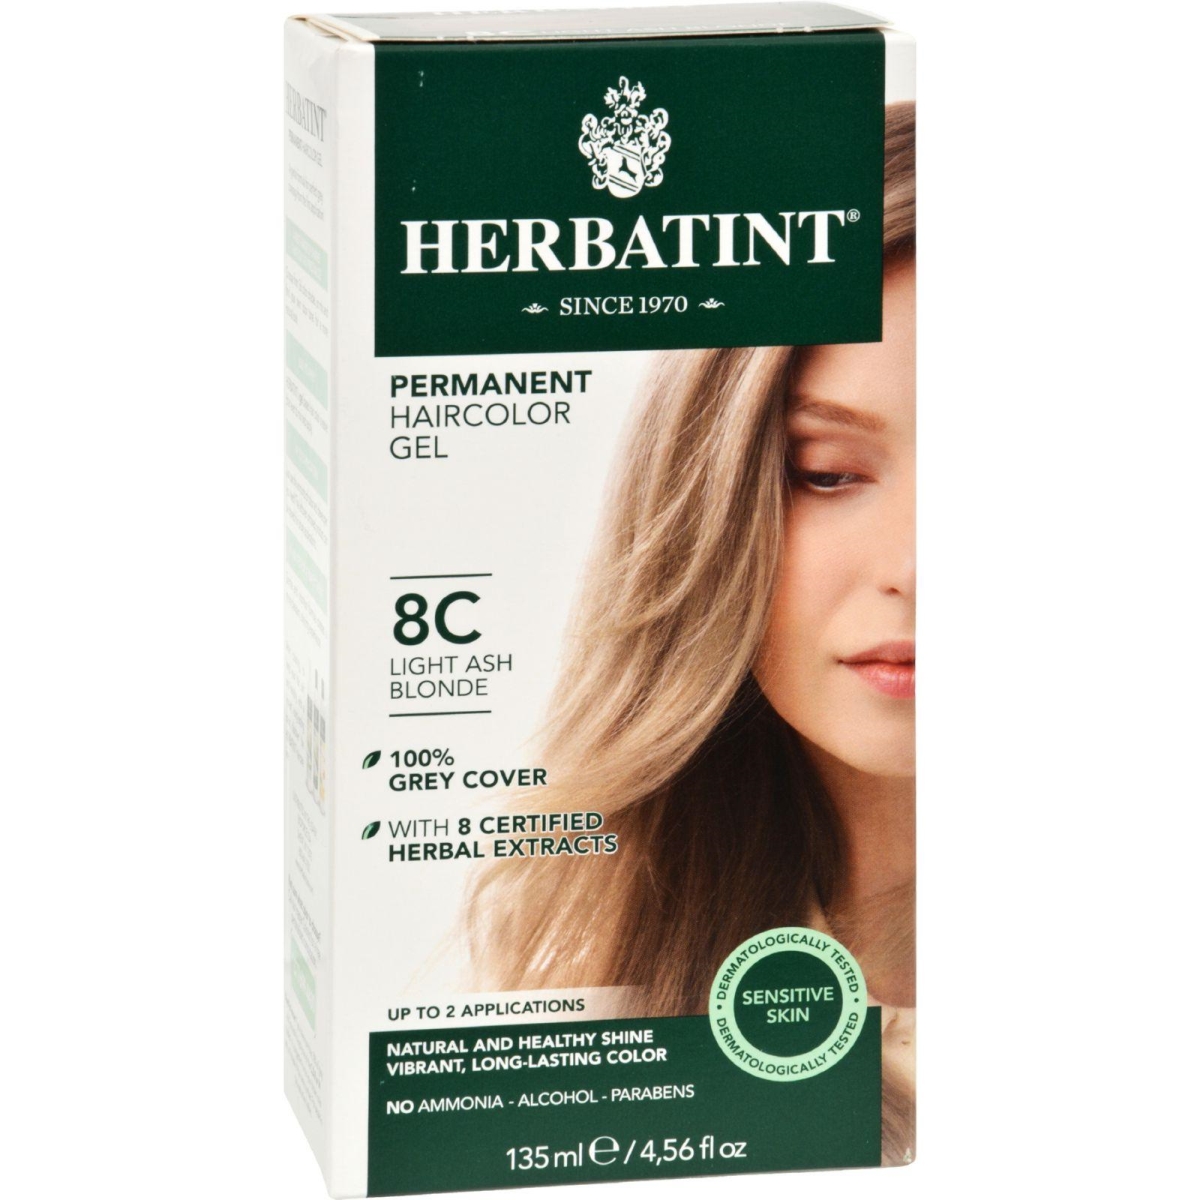 Hg0226985 135 Ml Permanent Herbal Haircolor Gel, 8c Light Ash Blonde